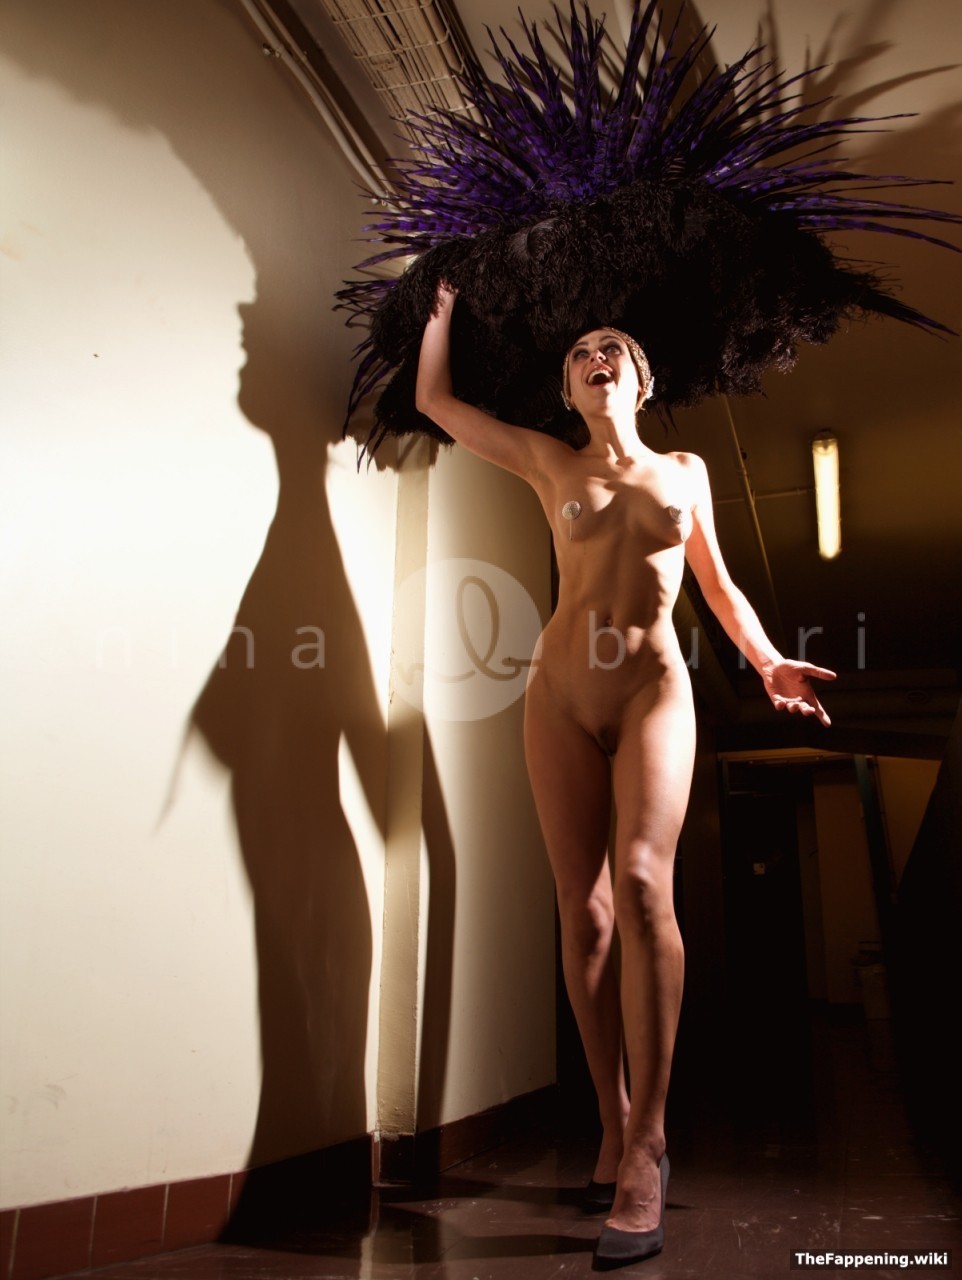 Nina Burri Xxx - Nina Burri Nude Pics & Vids - The Fappening